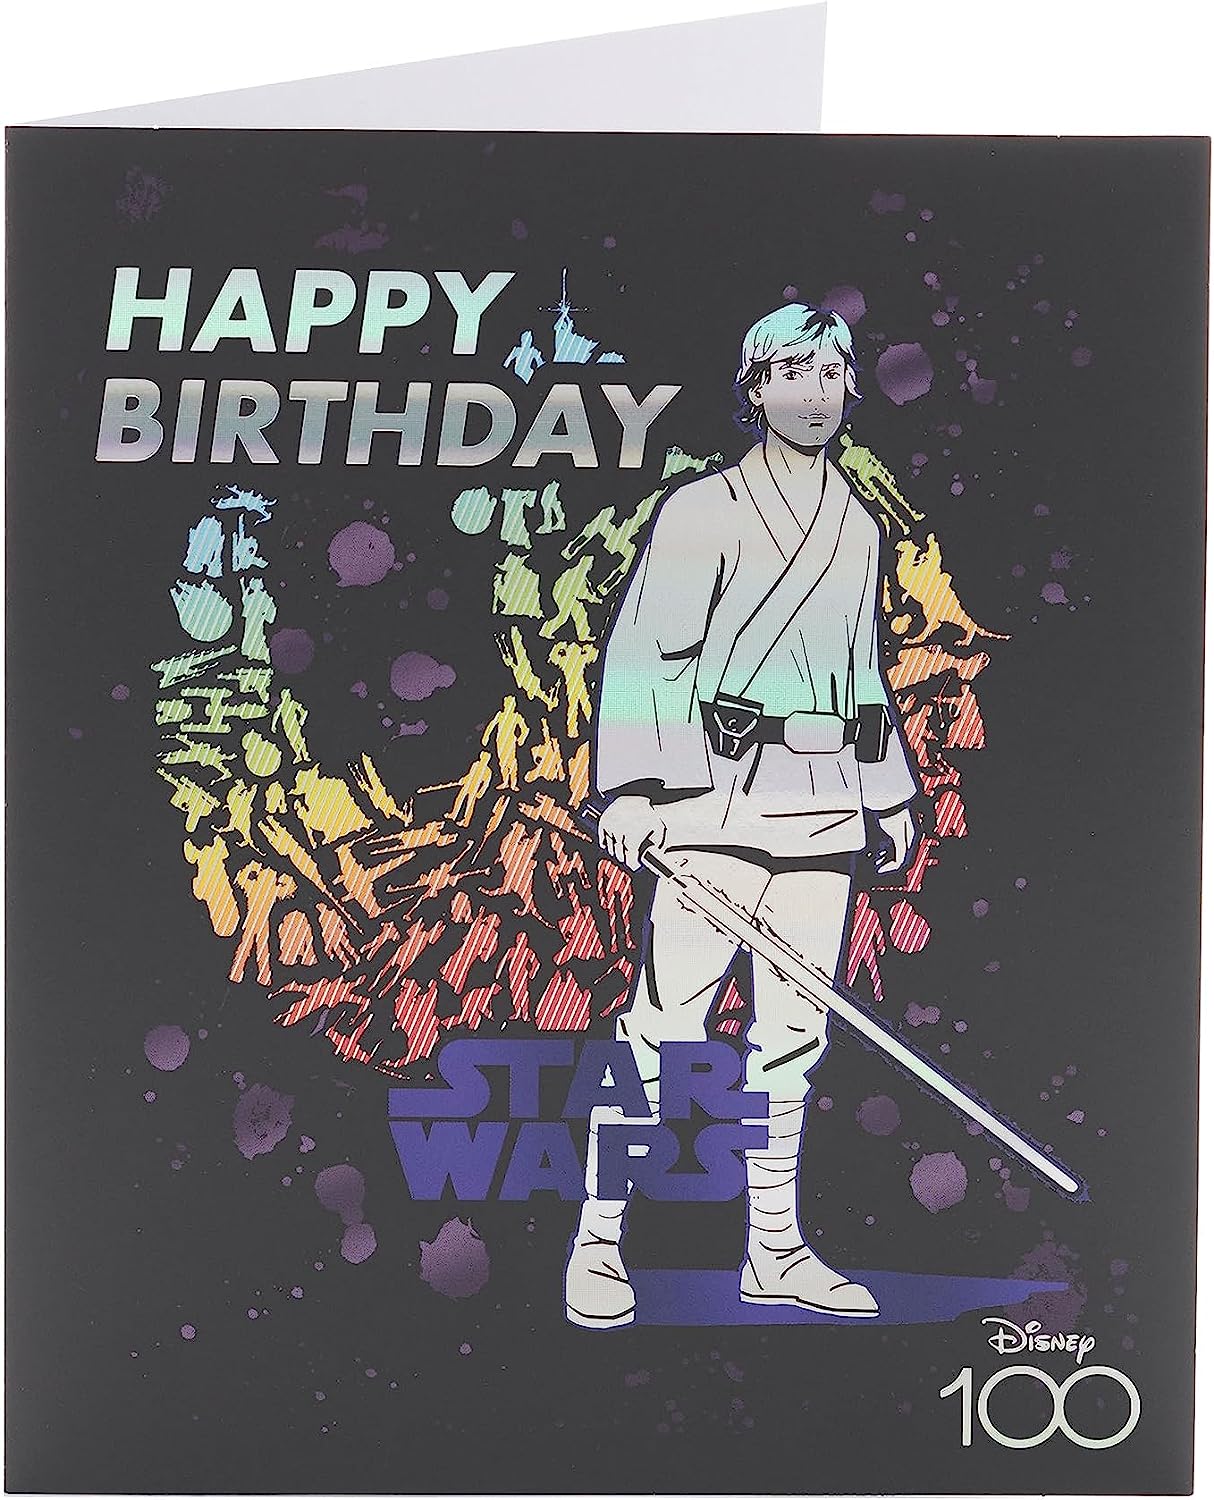 Star Wars Colourful Design, With Luke Skywalker Birthday Card